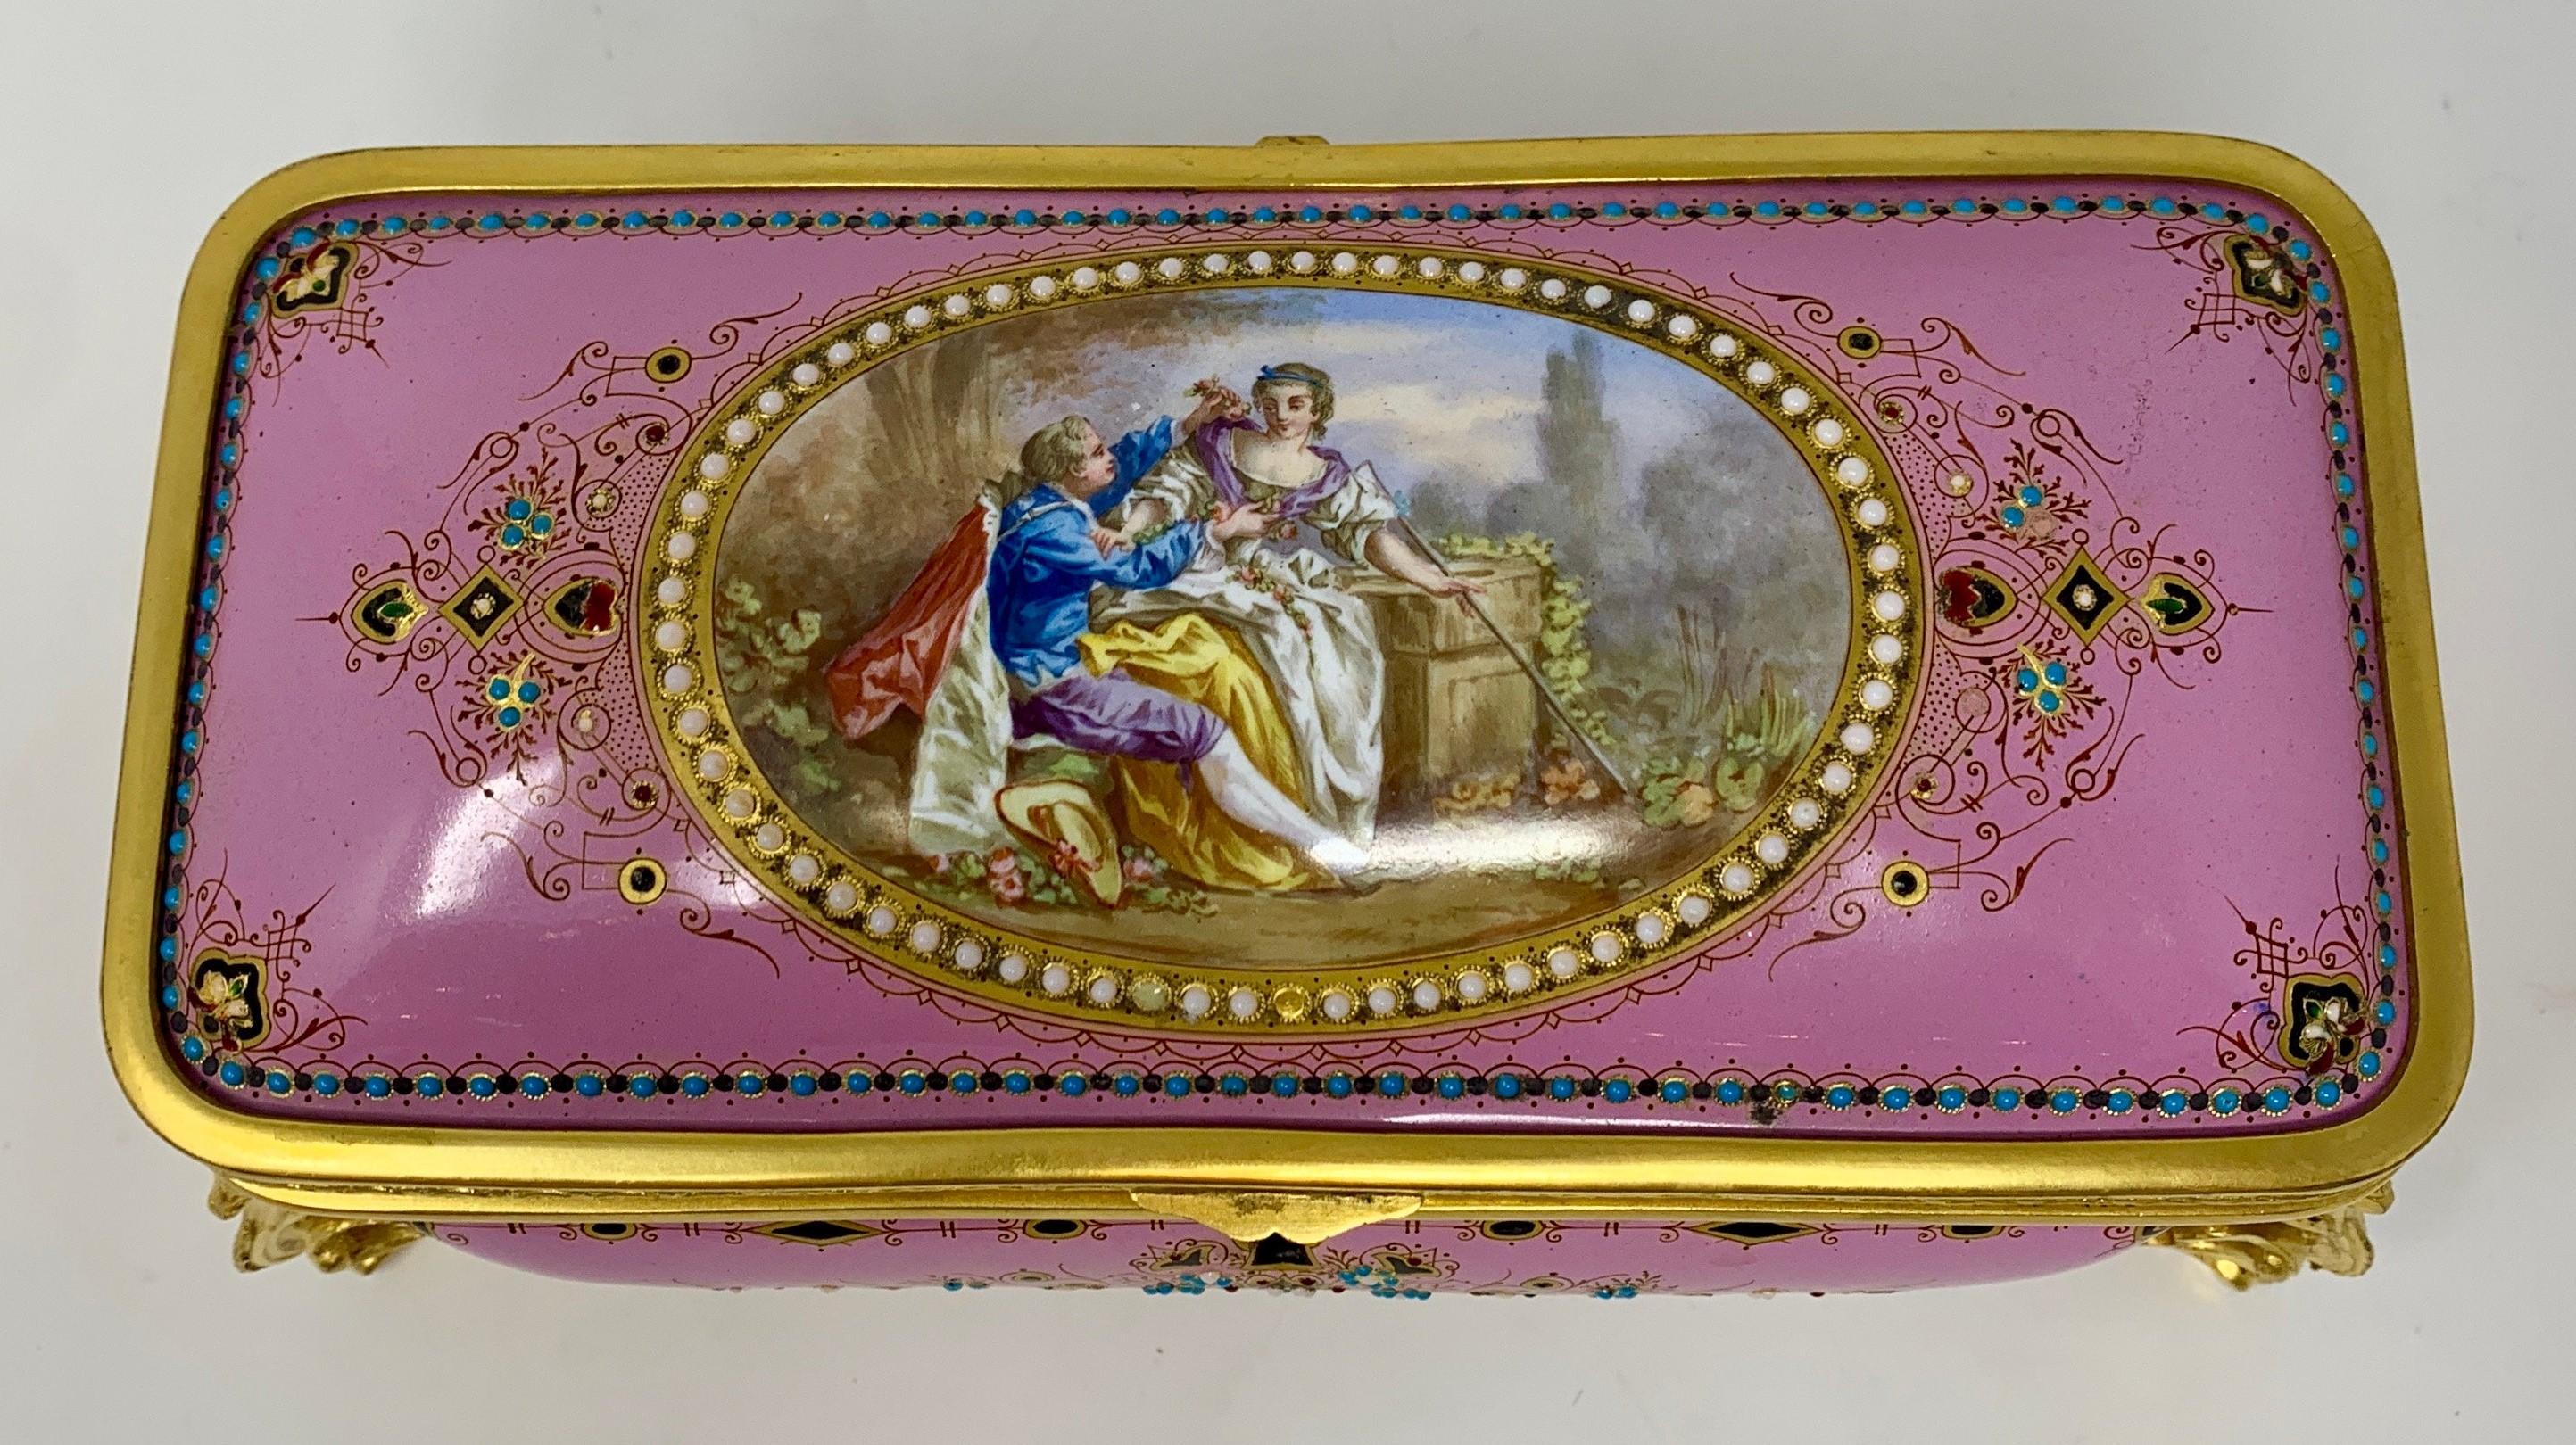 Antique French pink enameled ormolu box, circa 1860-1870
FBX024.